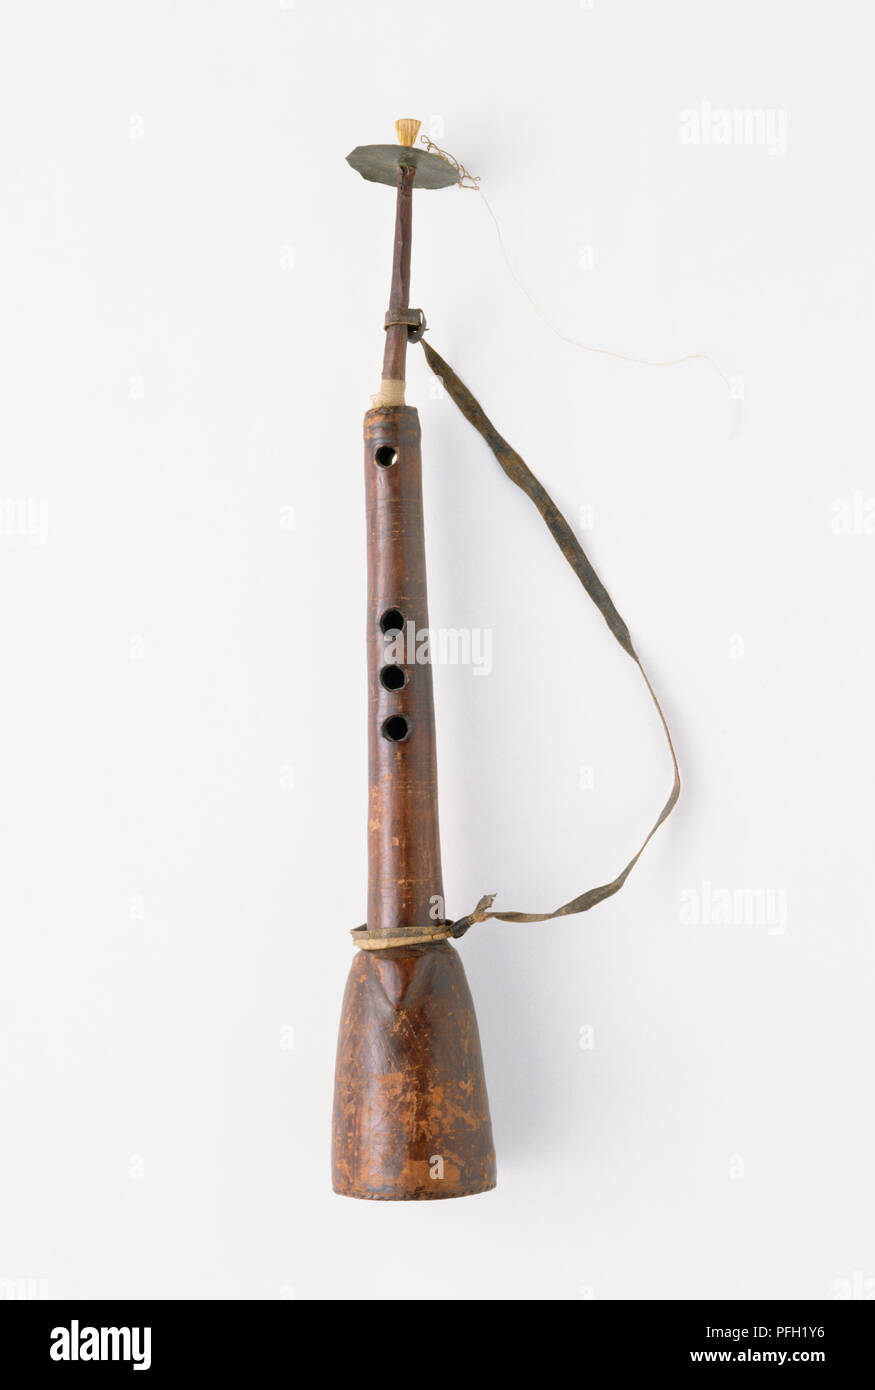 Algaita, view of whole instrument showing fingerholes. Stock Photo